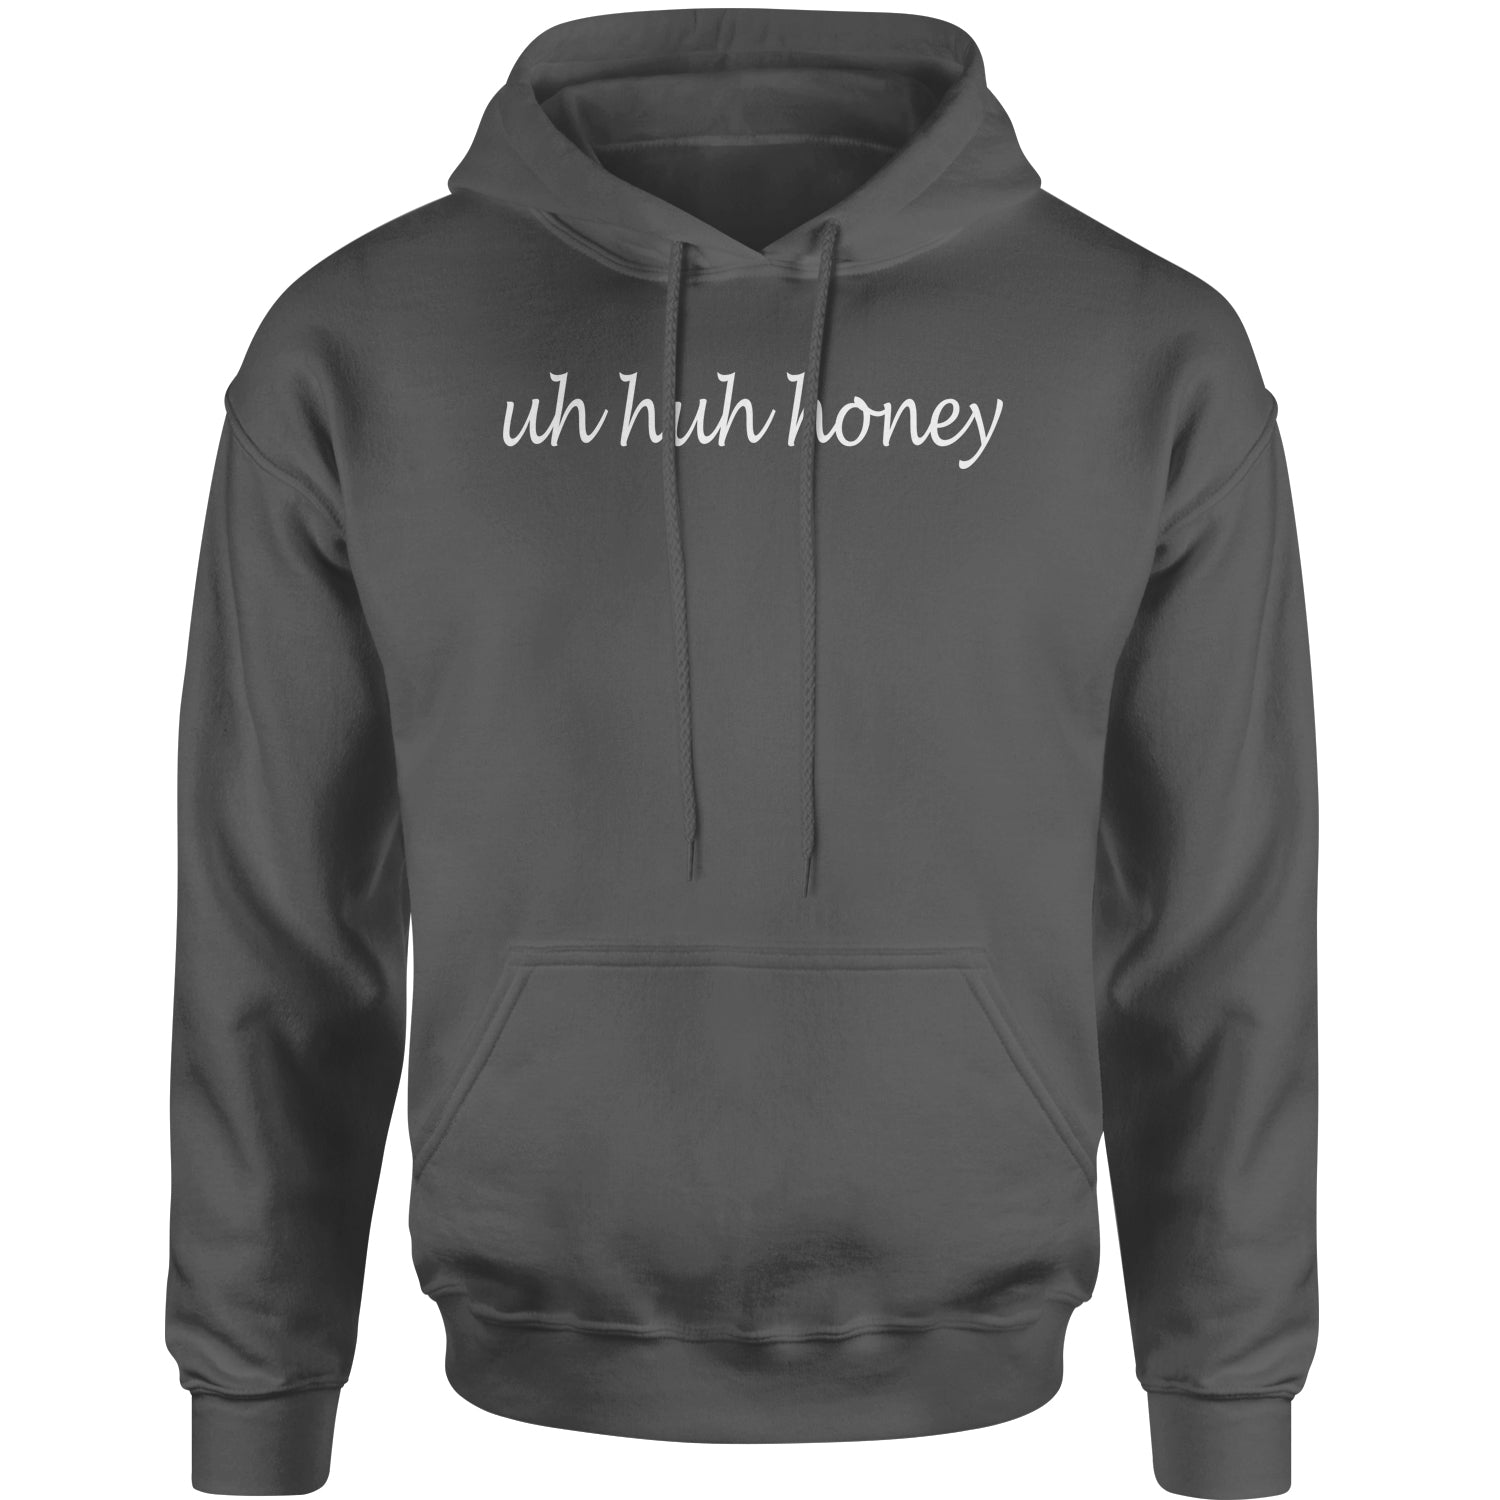 Uh Huh Honey Adult Hoodie Sweatshirt uhhuh, uhuh, unhunh by Expression Tees